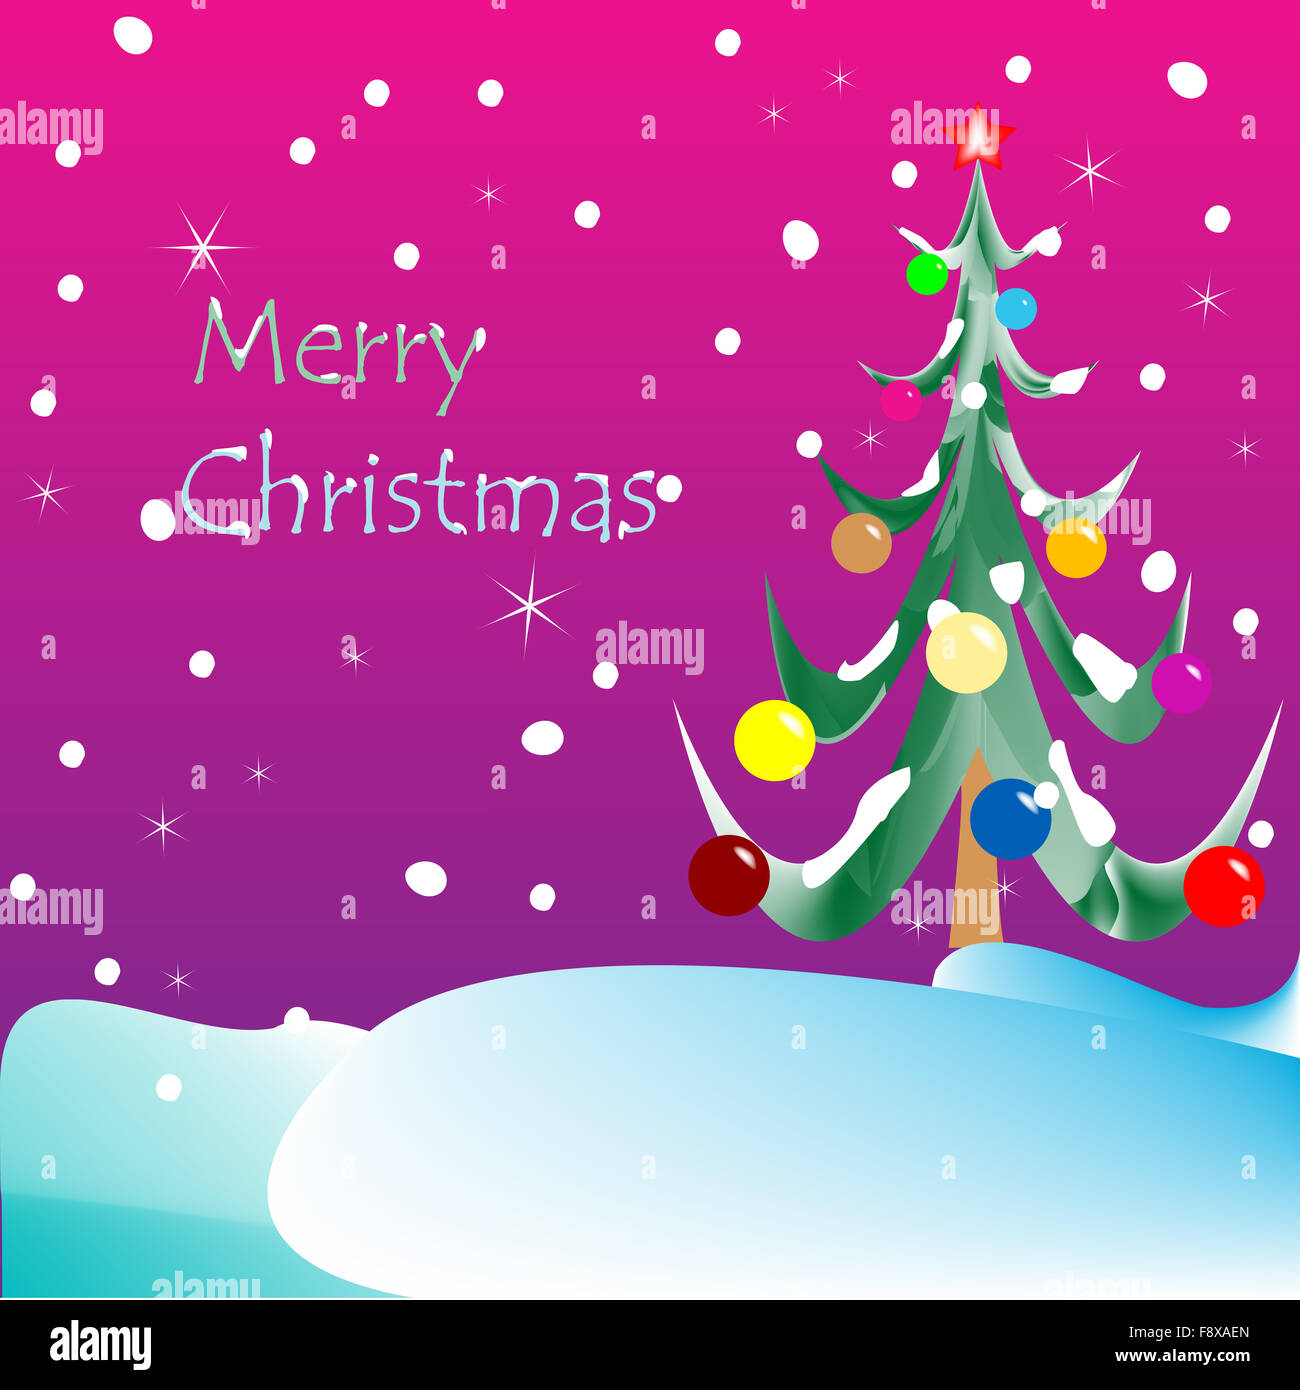 merry christmas card (purple background) Stock Photo